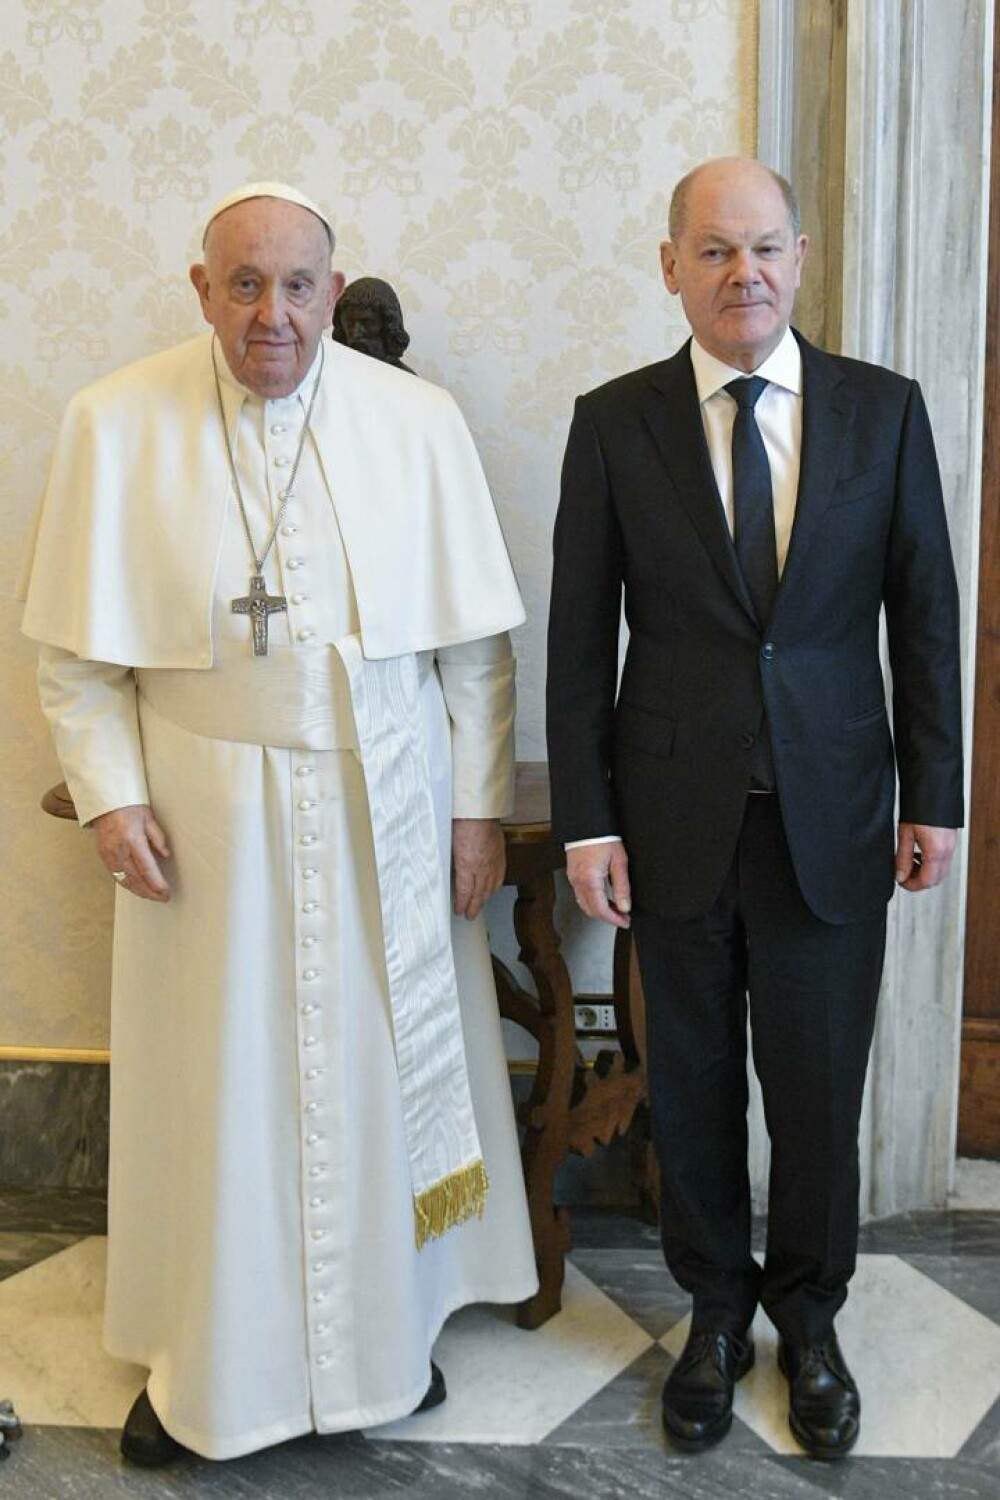 Olaf Scholz a fost primit la Vatican de Papa Francisc. Ce cadou i-a oferit suveranului pontif. FOTO - Imaginea 1